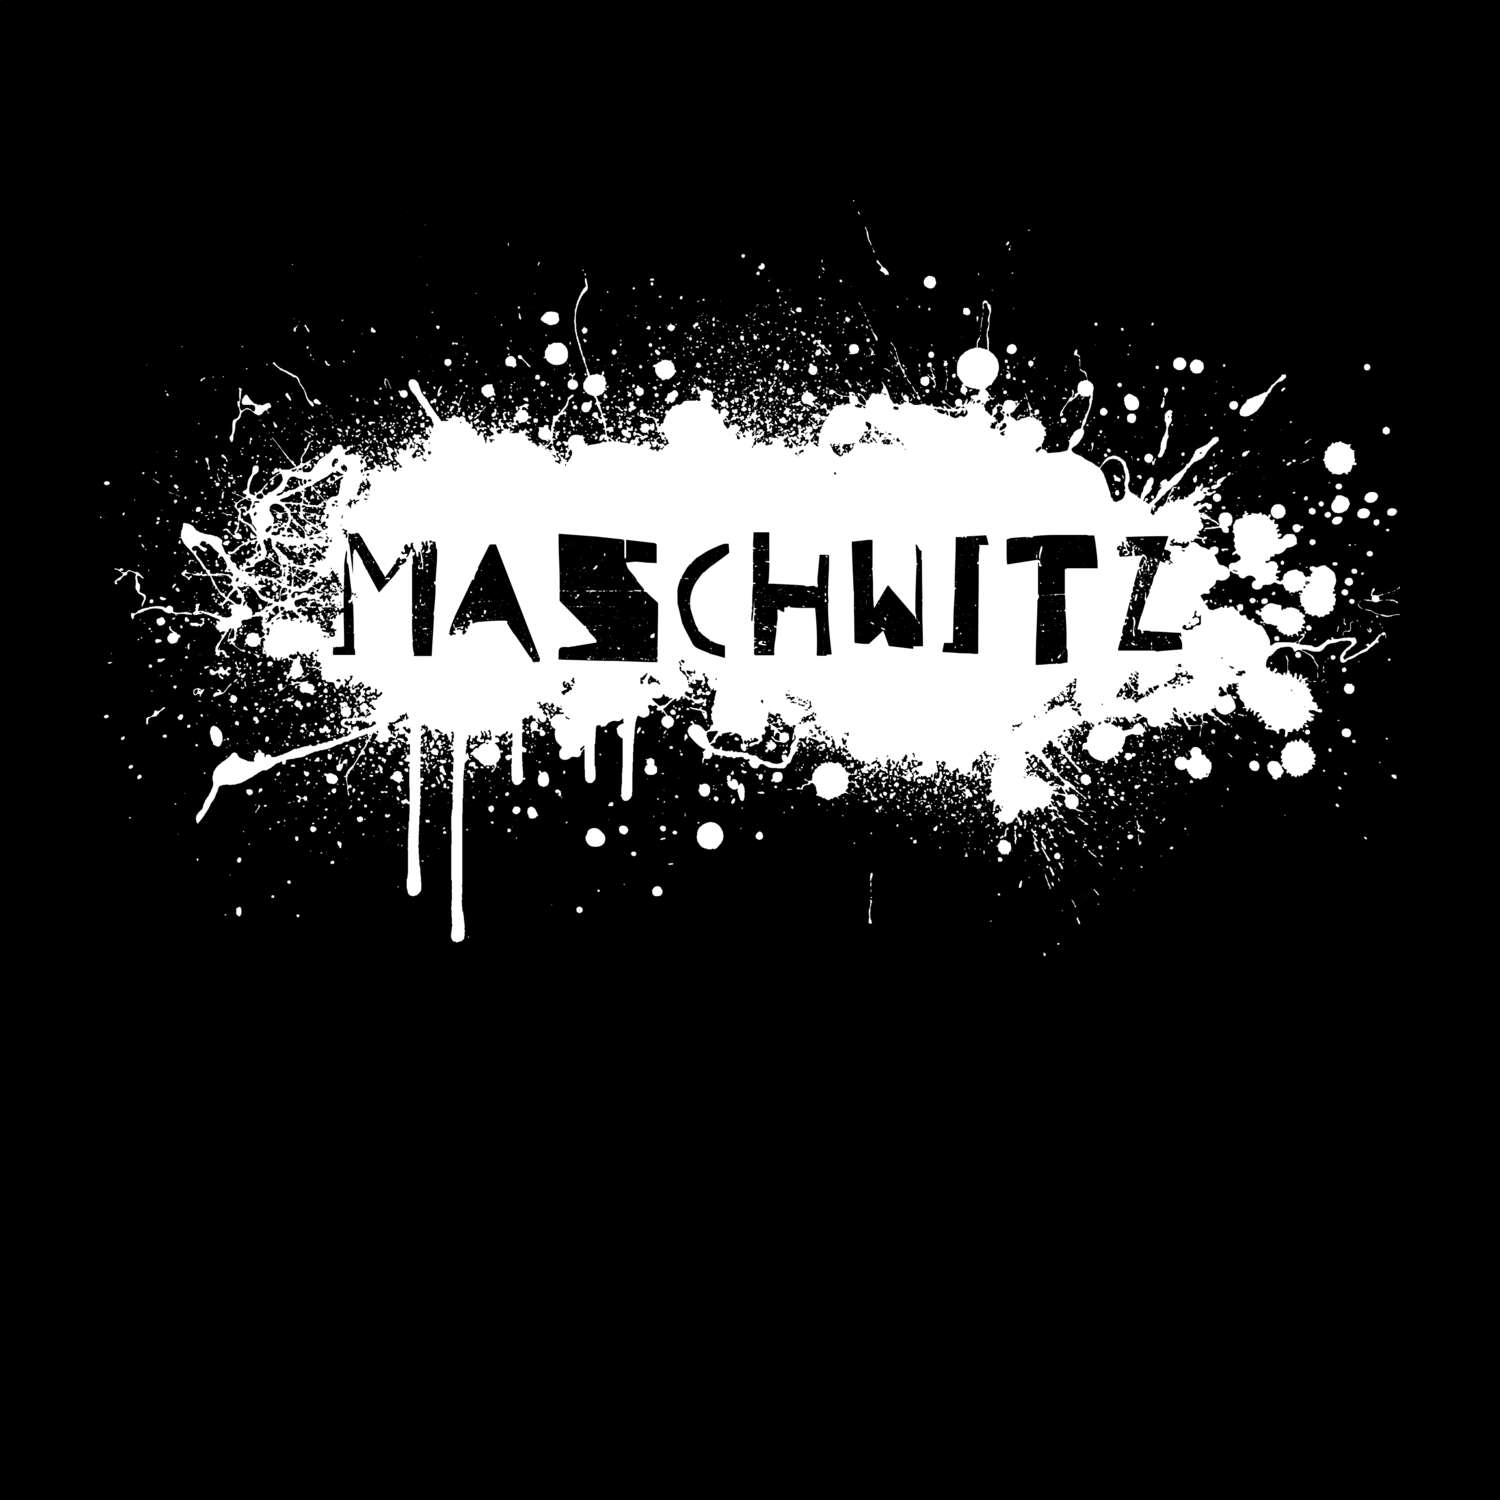 Maschwitz T-Shirt »Paint Splash Punk«